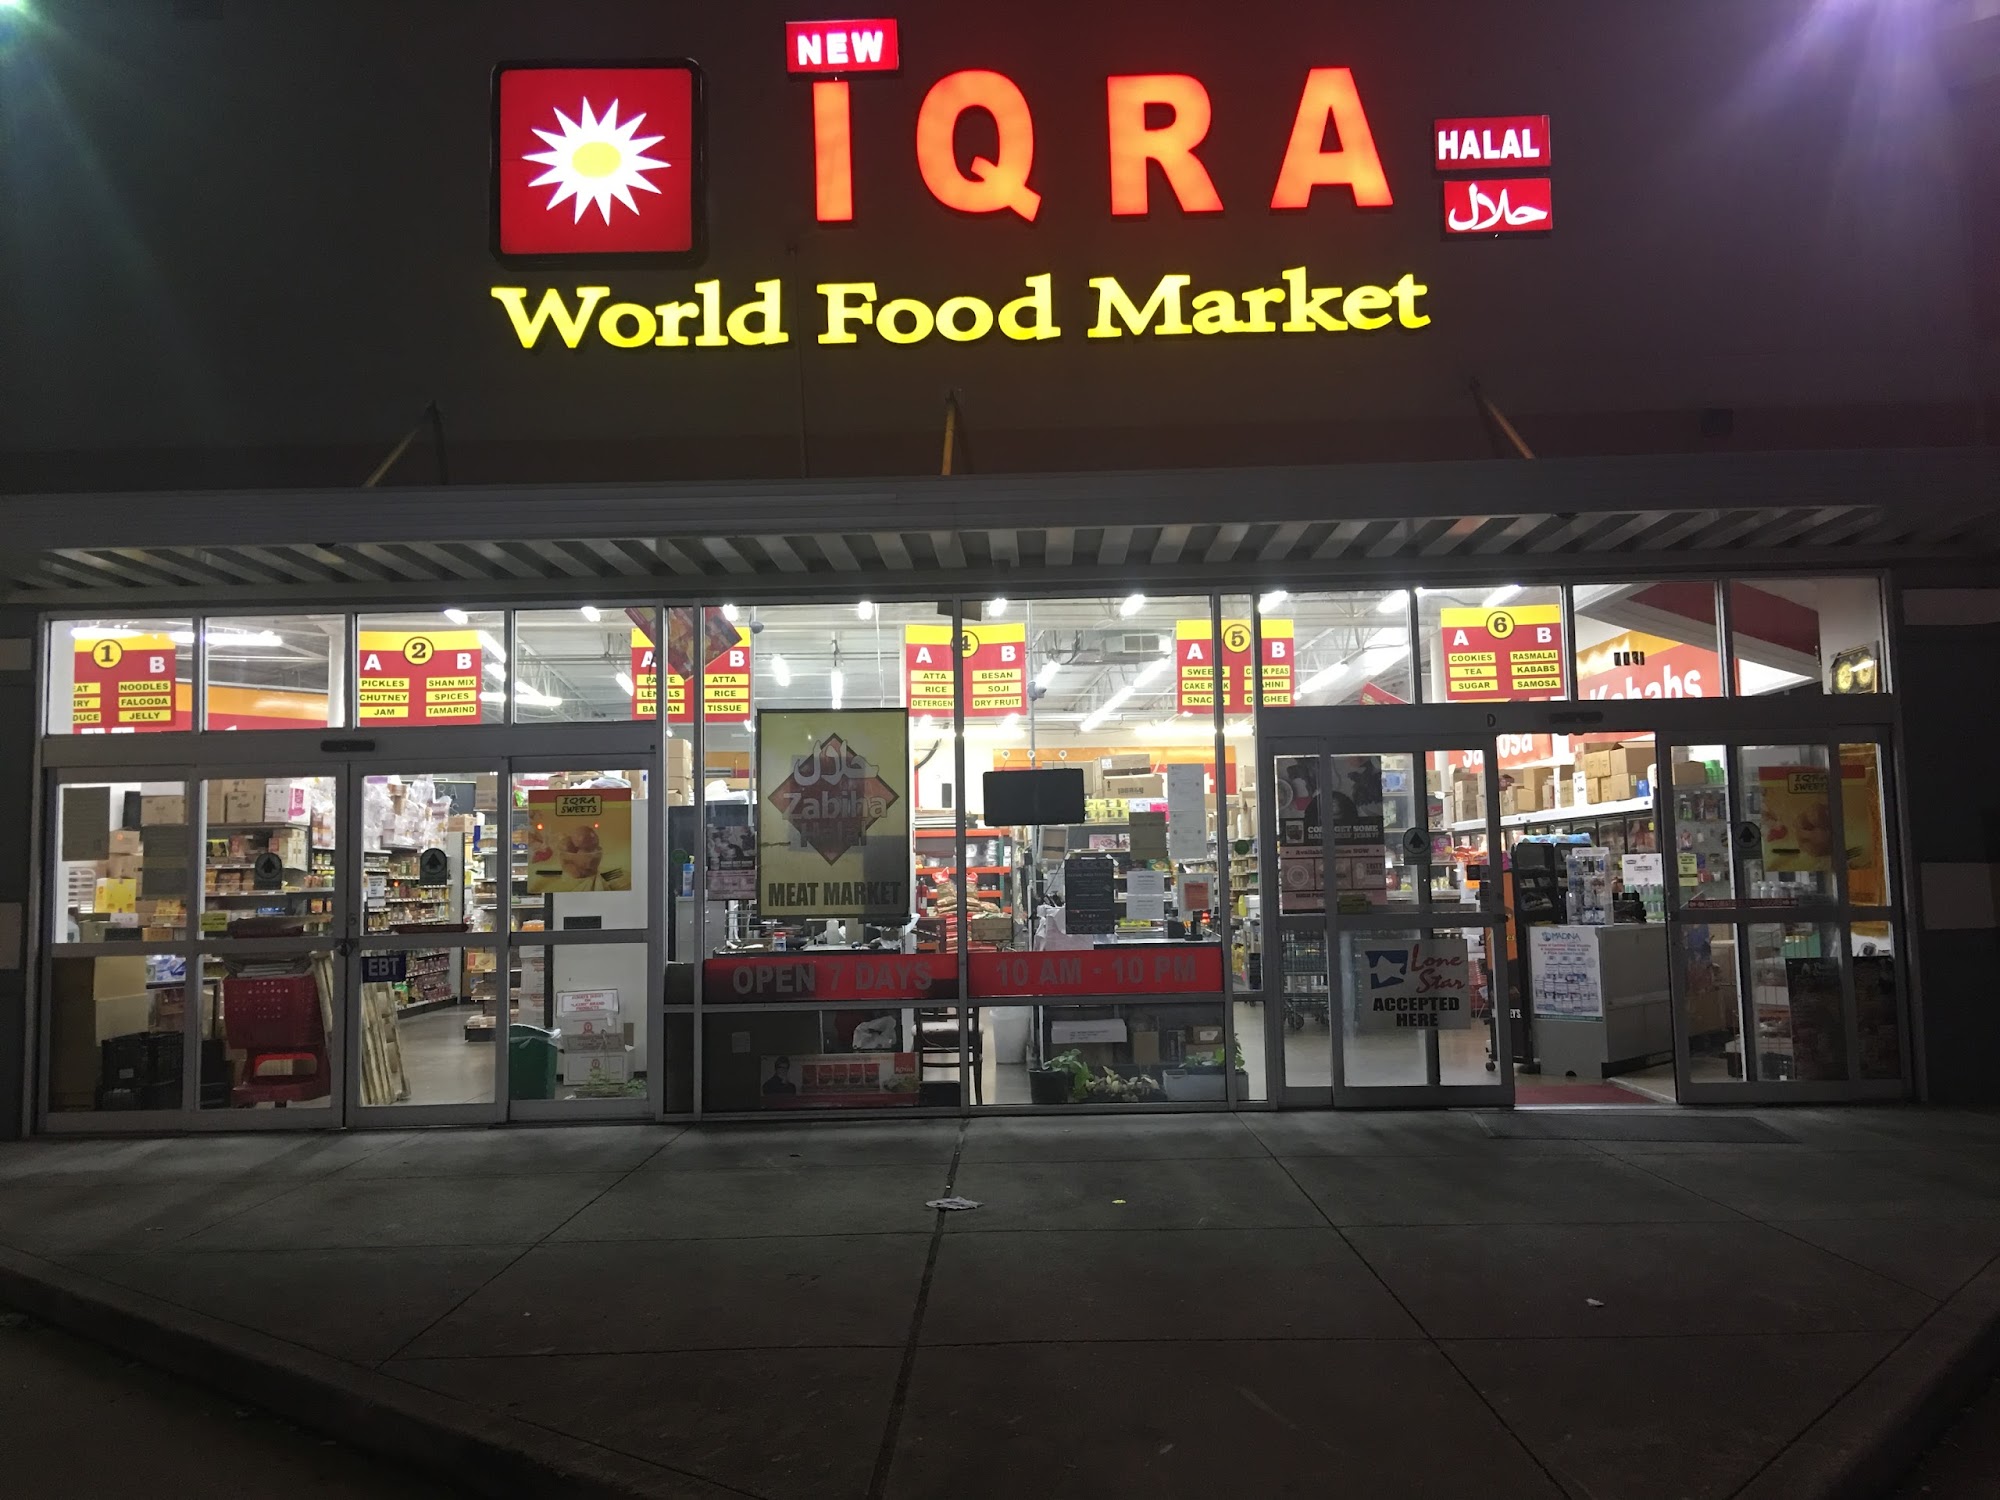 New Iqra World Food Market